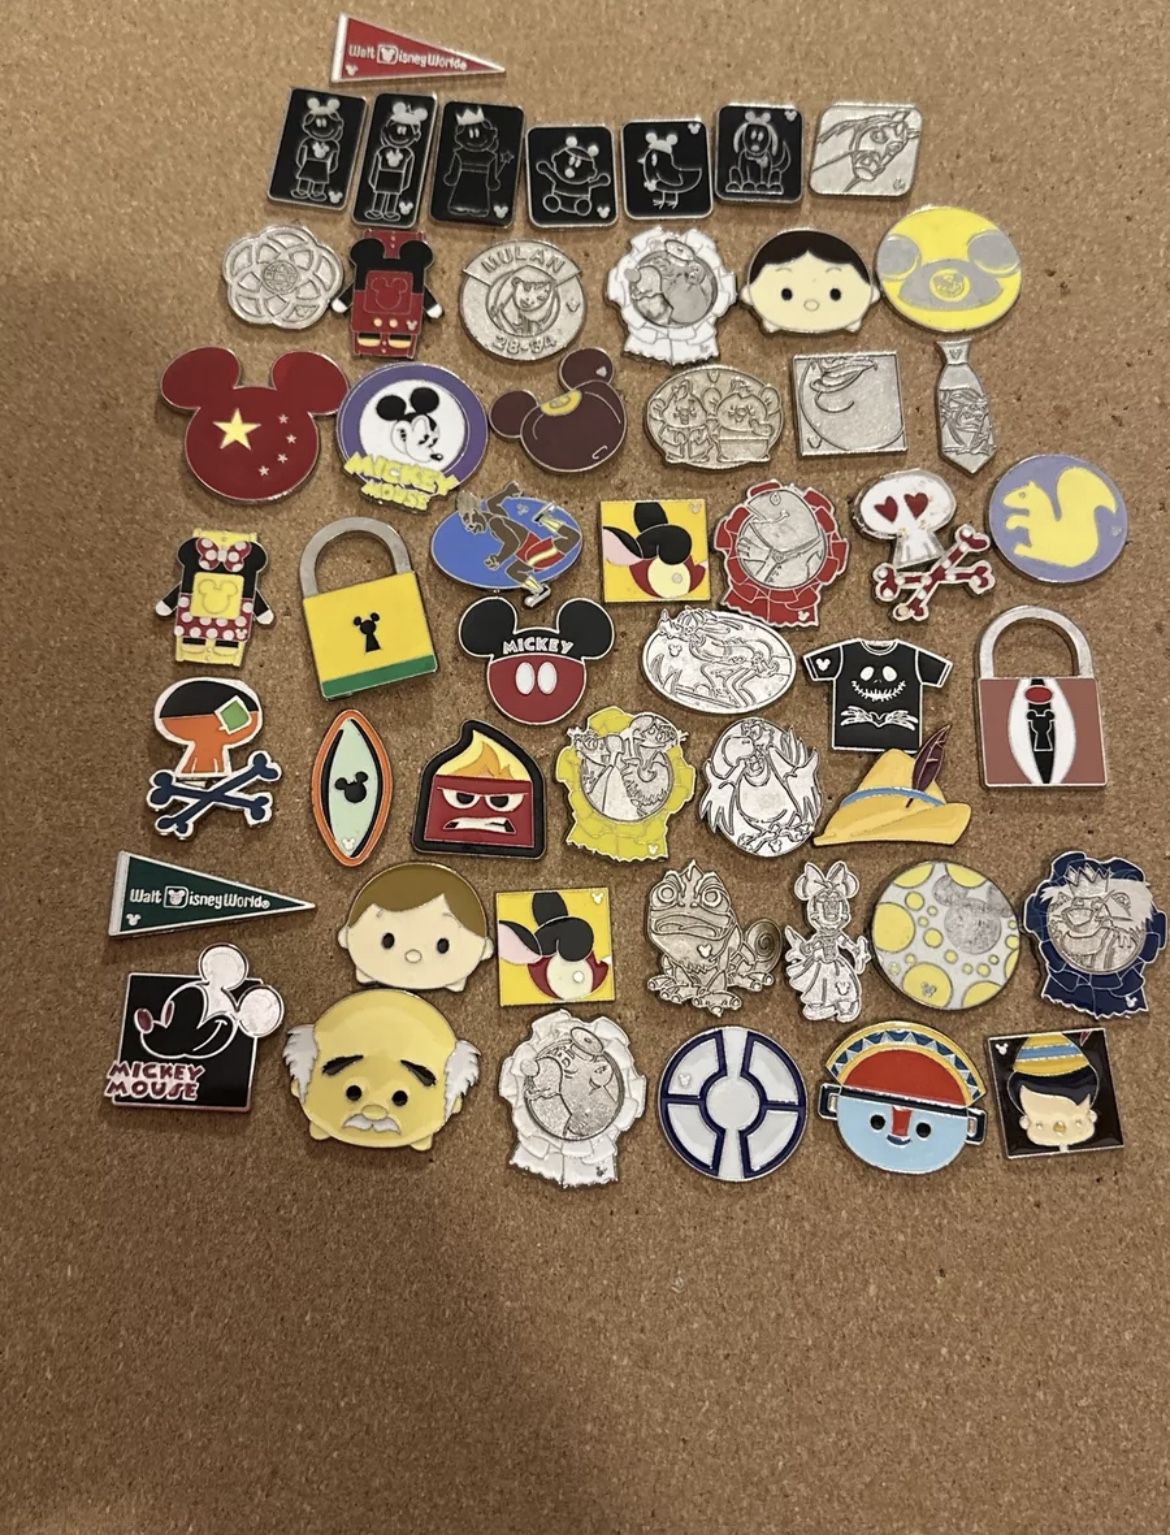 Lot Of 50 Disney Trading Pins Hidden Mickey Various Years 2000-2017 NO BACKS